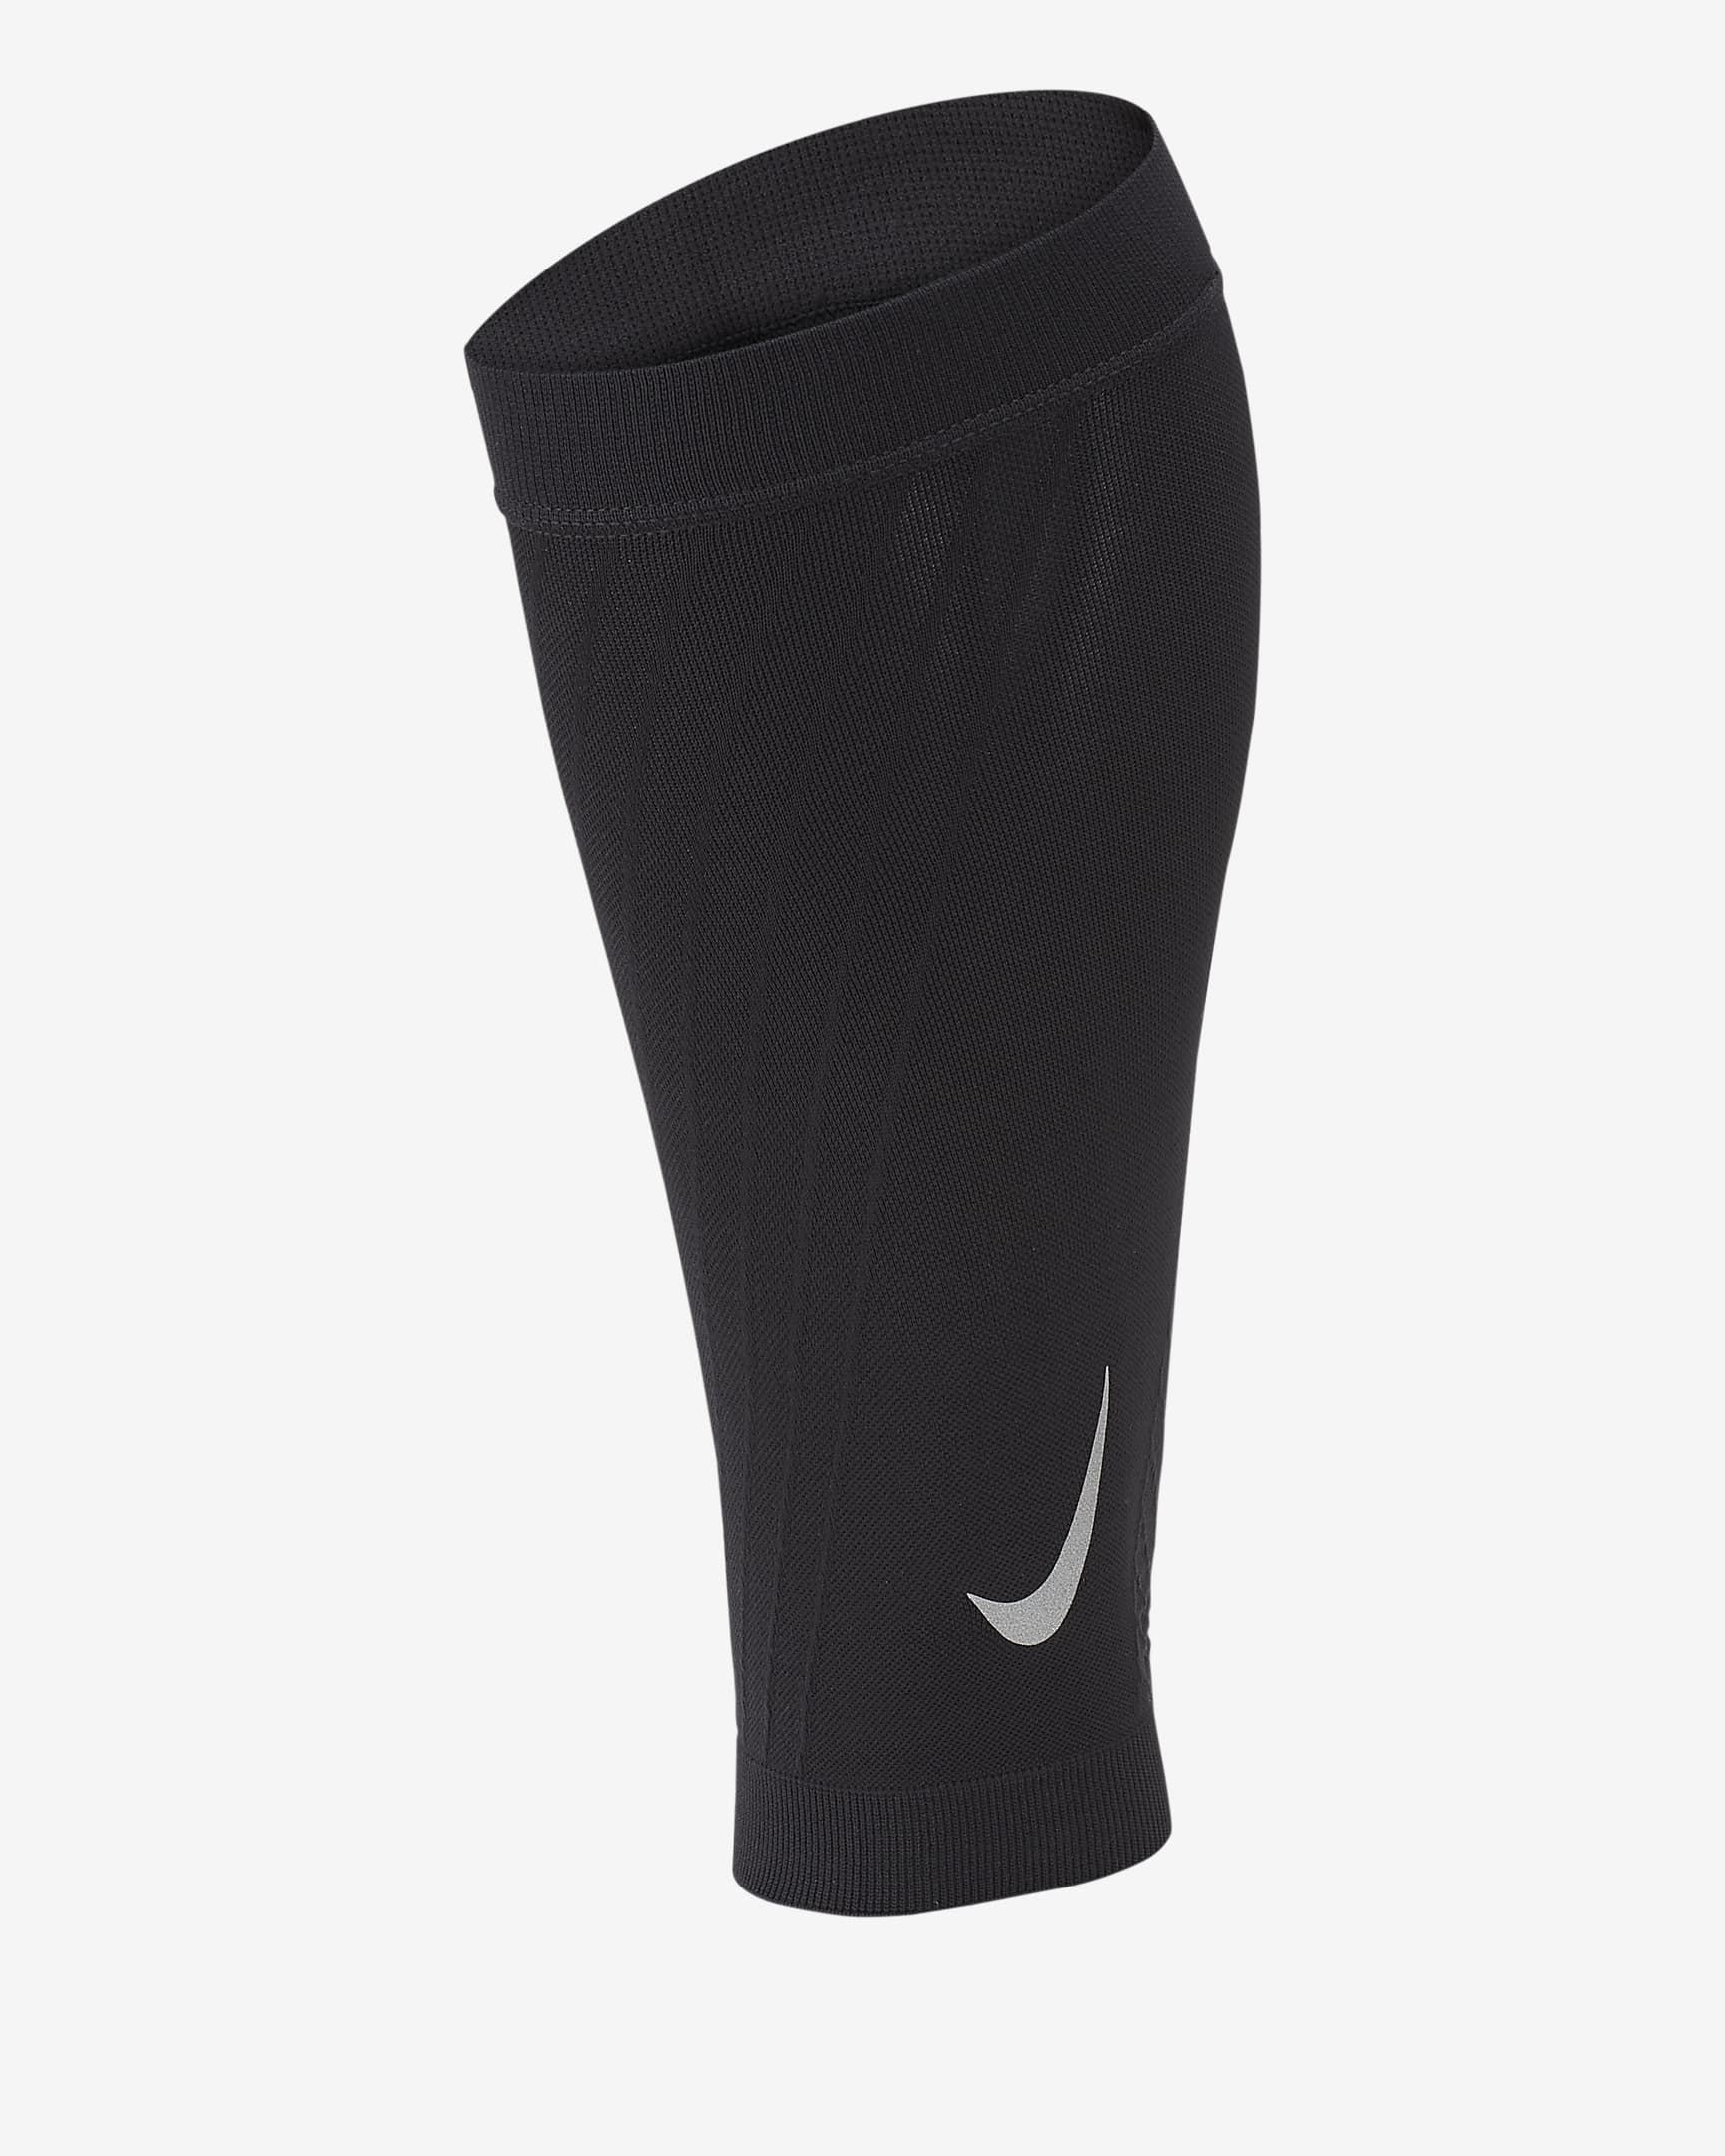 Nike Calf Sleeves - Black/Silver